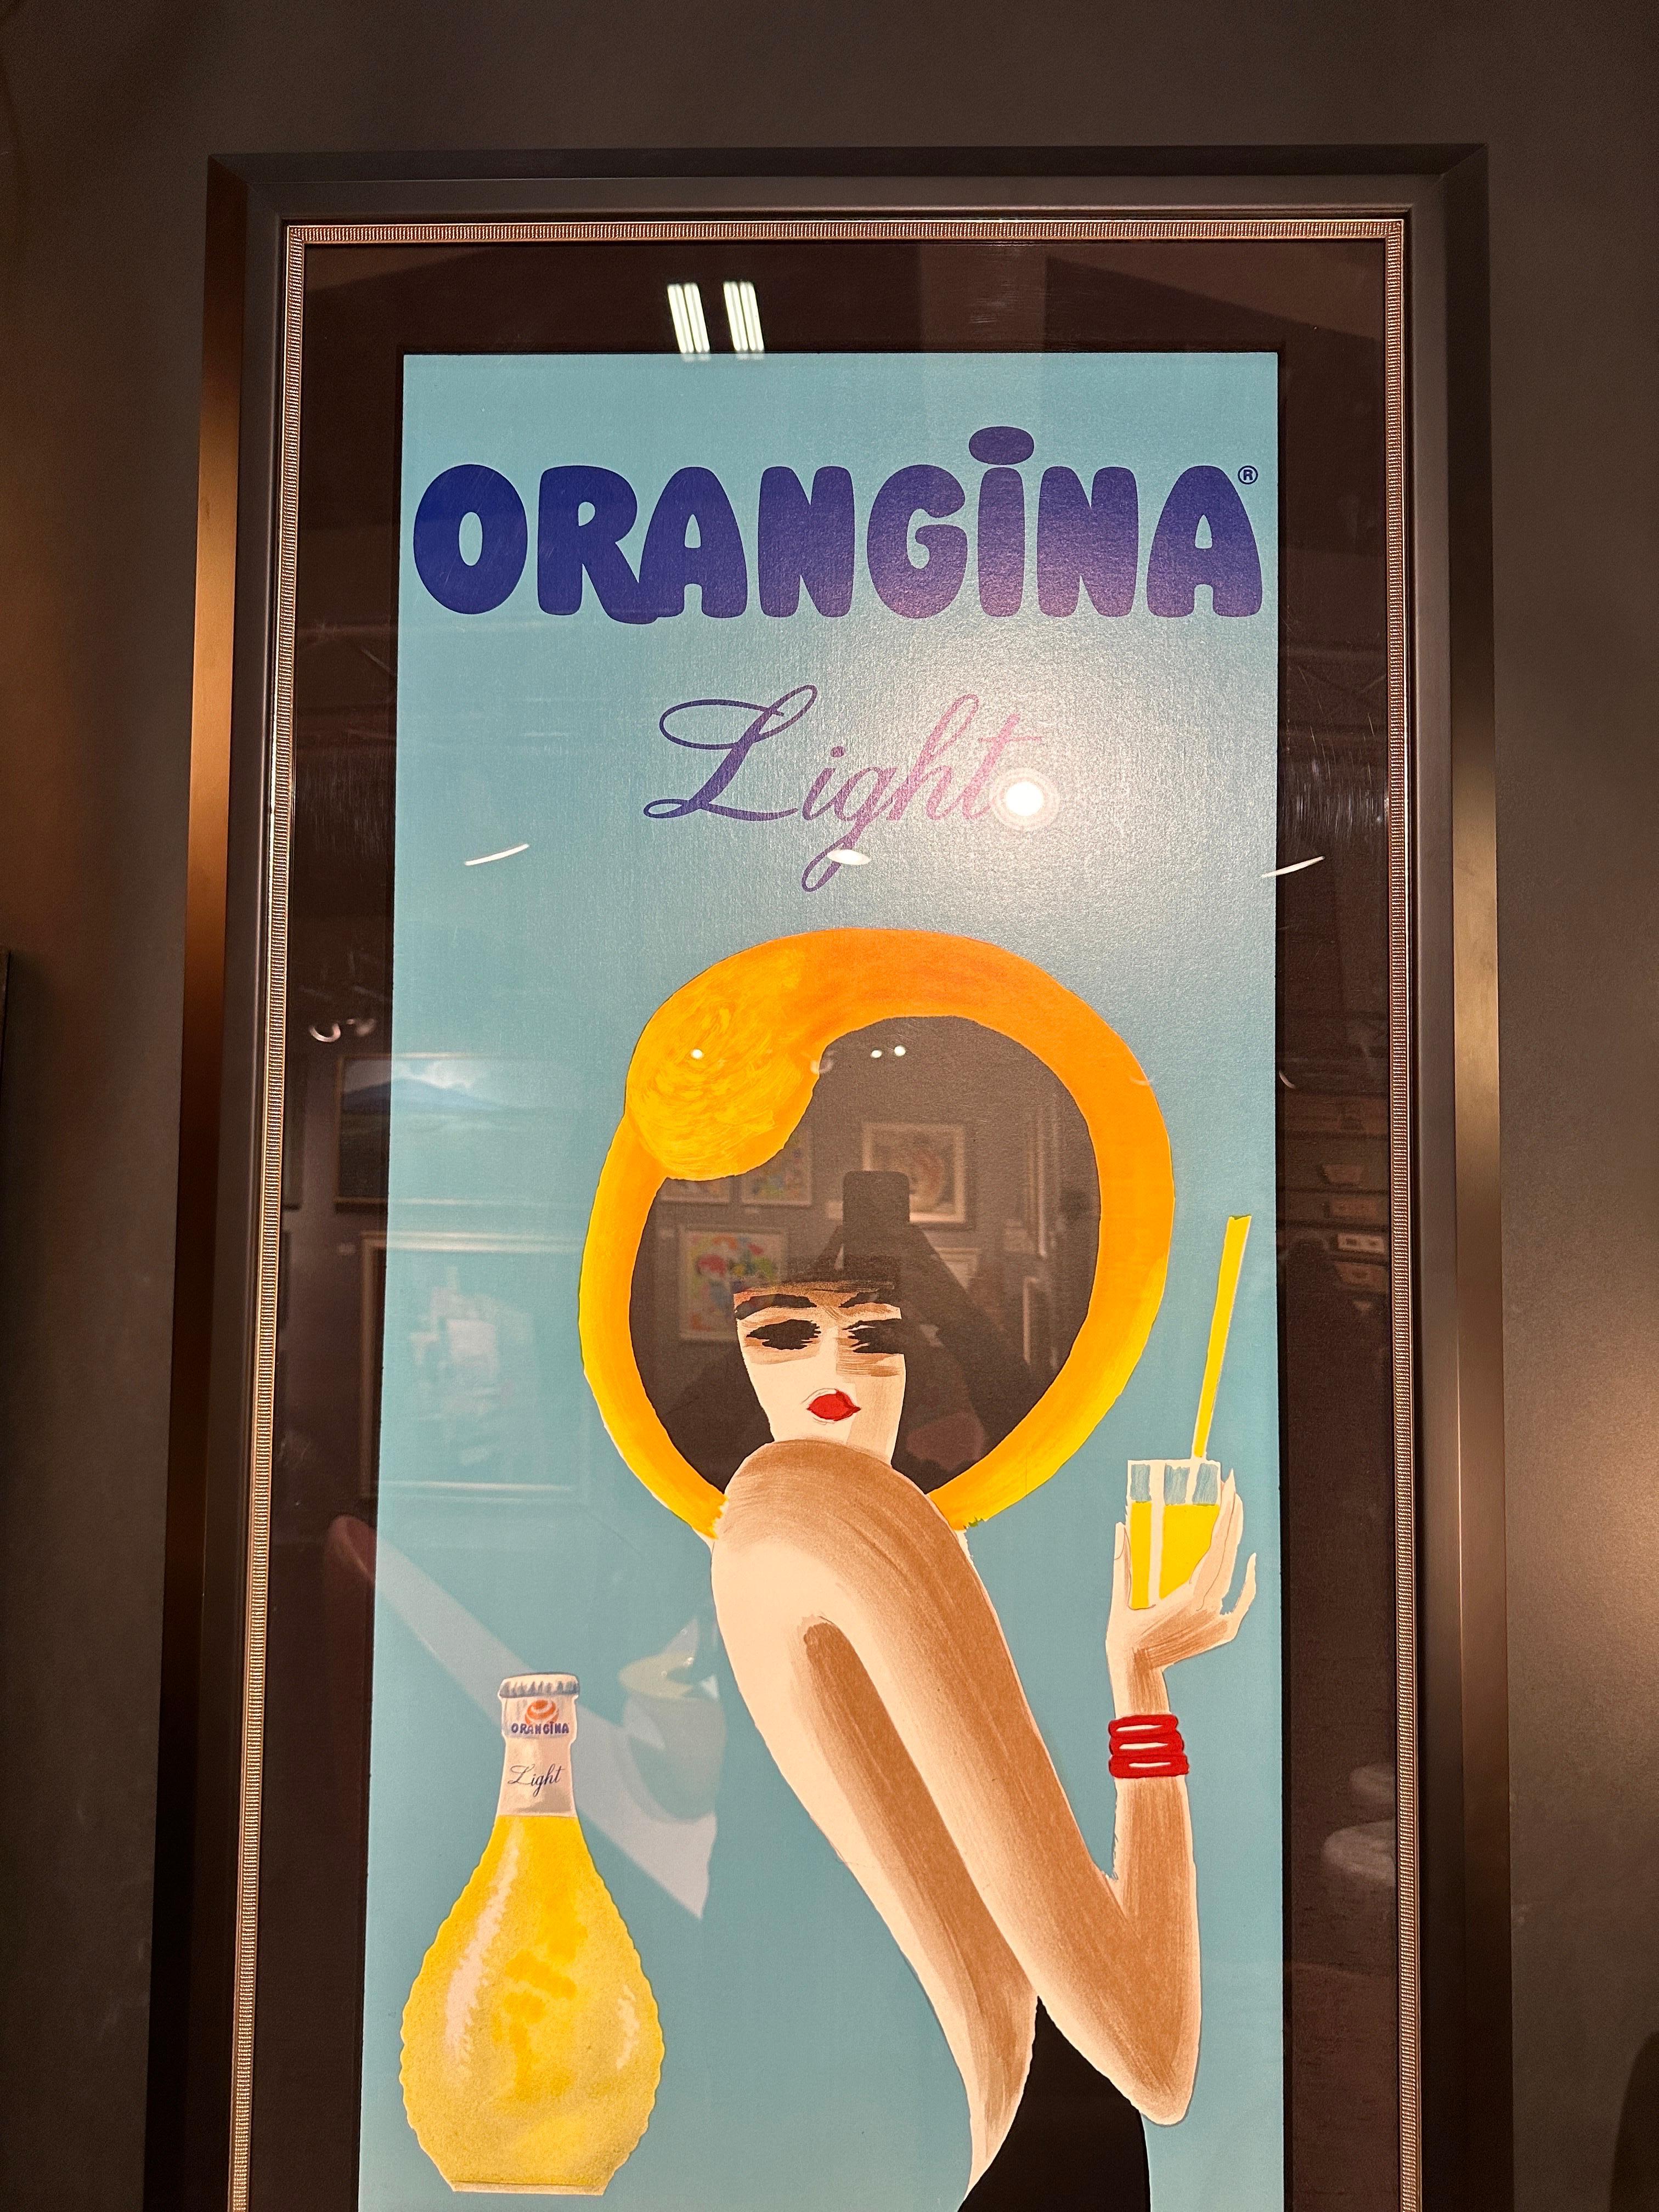 French Rare “Orangina” Poster by Bernard Villemot  For Sale